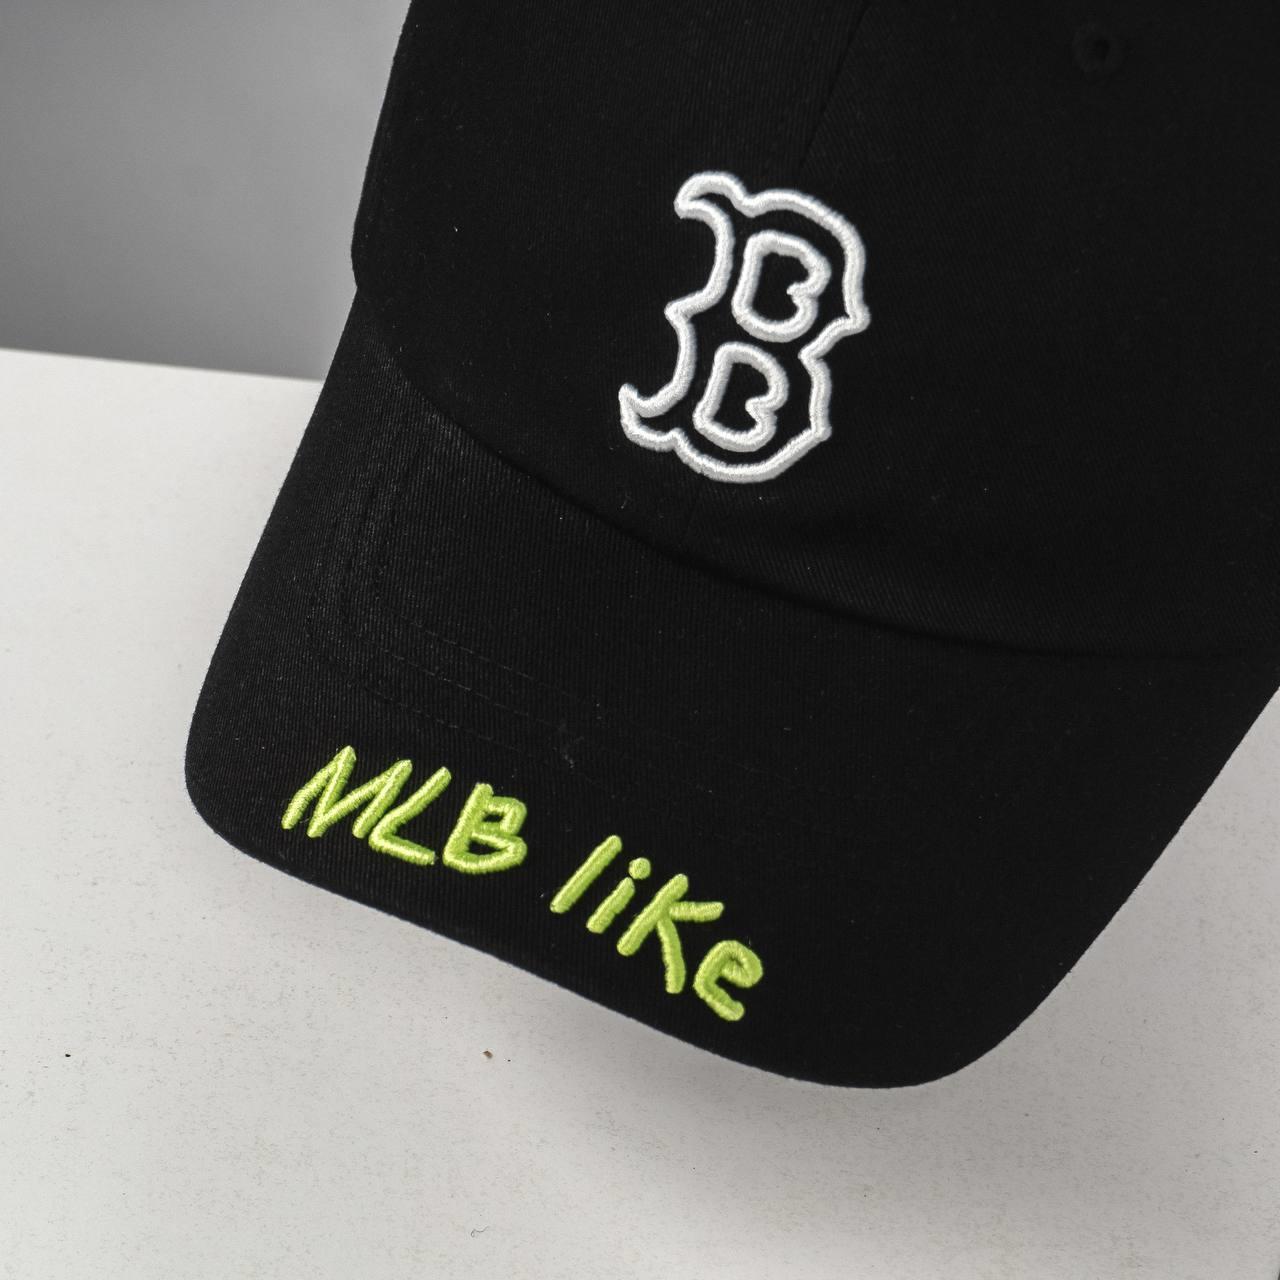 Nón MLB Denim Dia Monogram Structured Ball cap Boston Red Sox  Xịn  Authentic